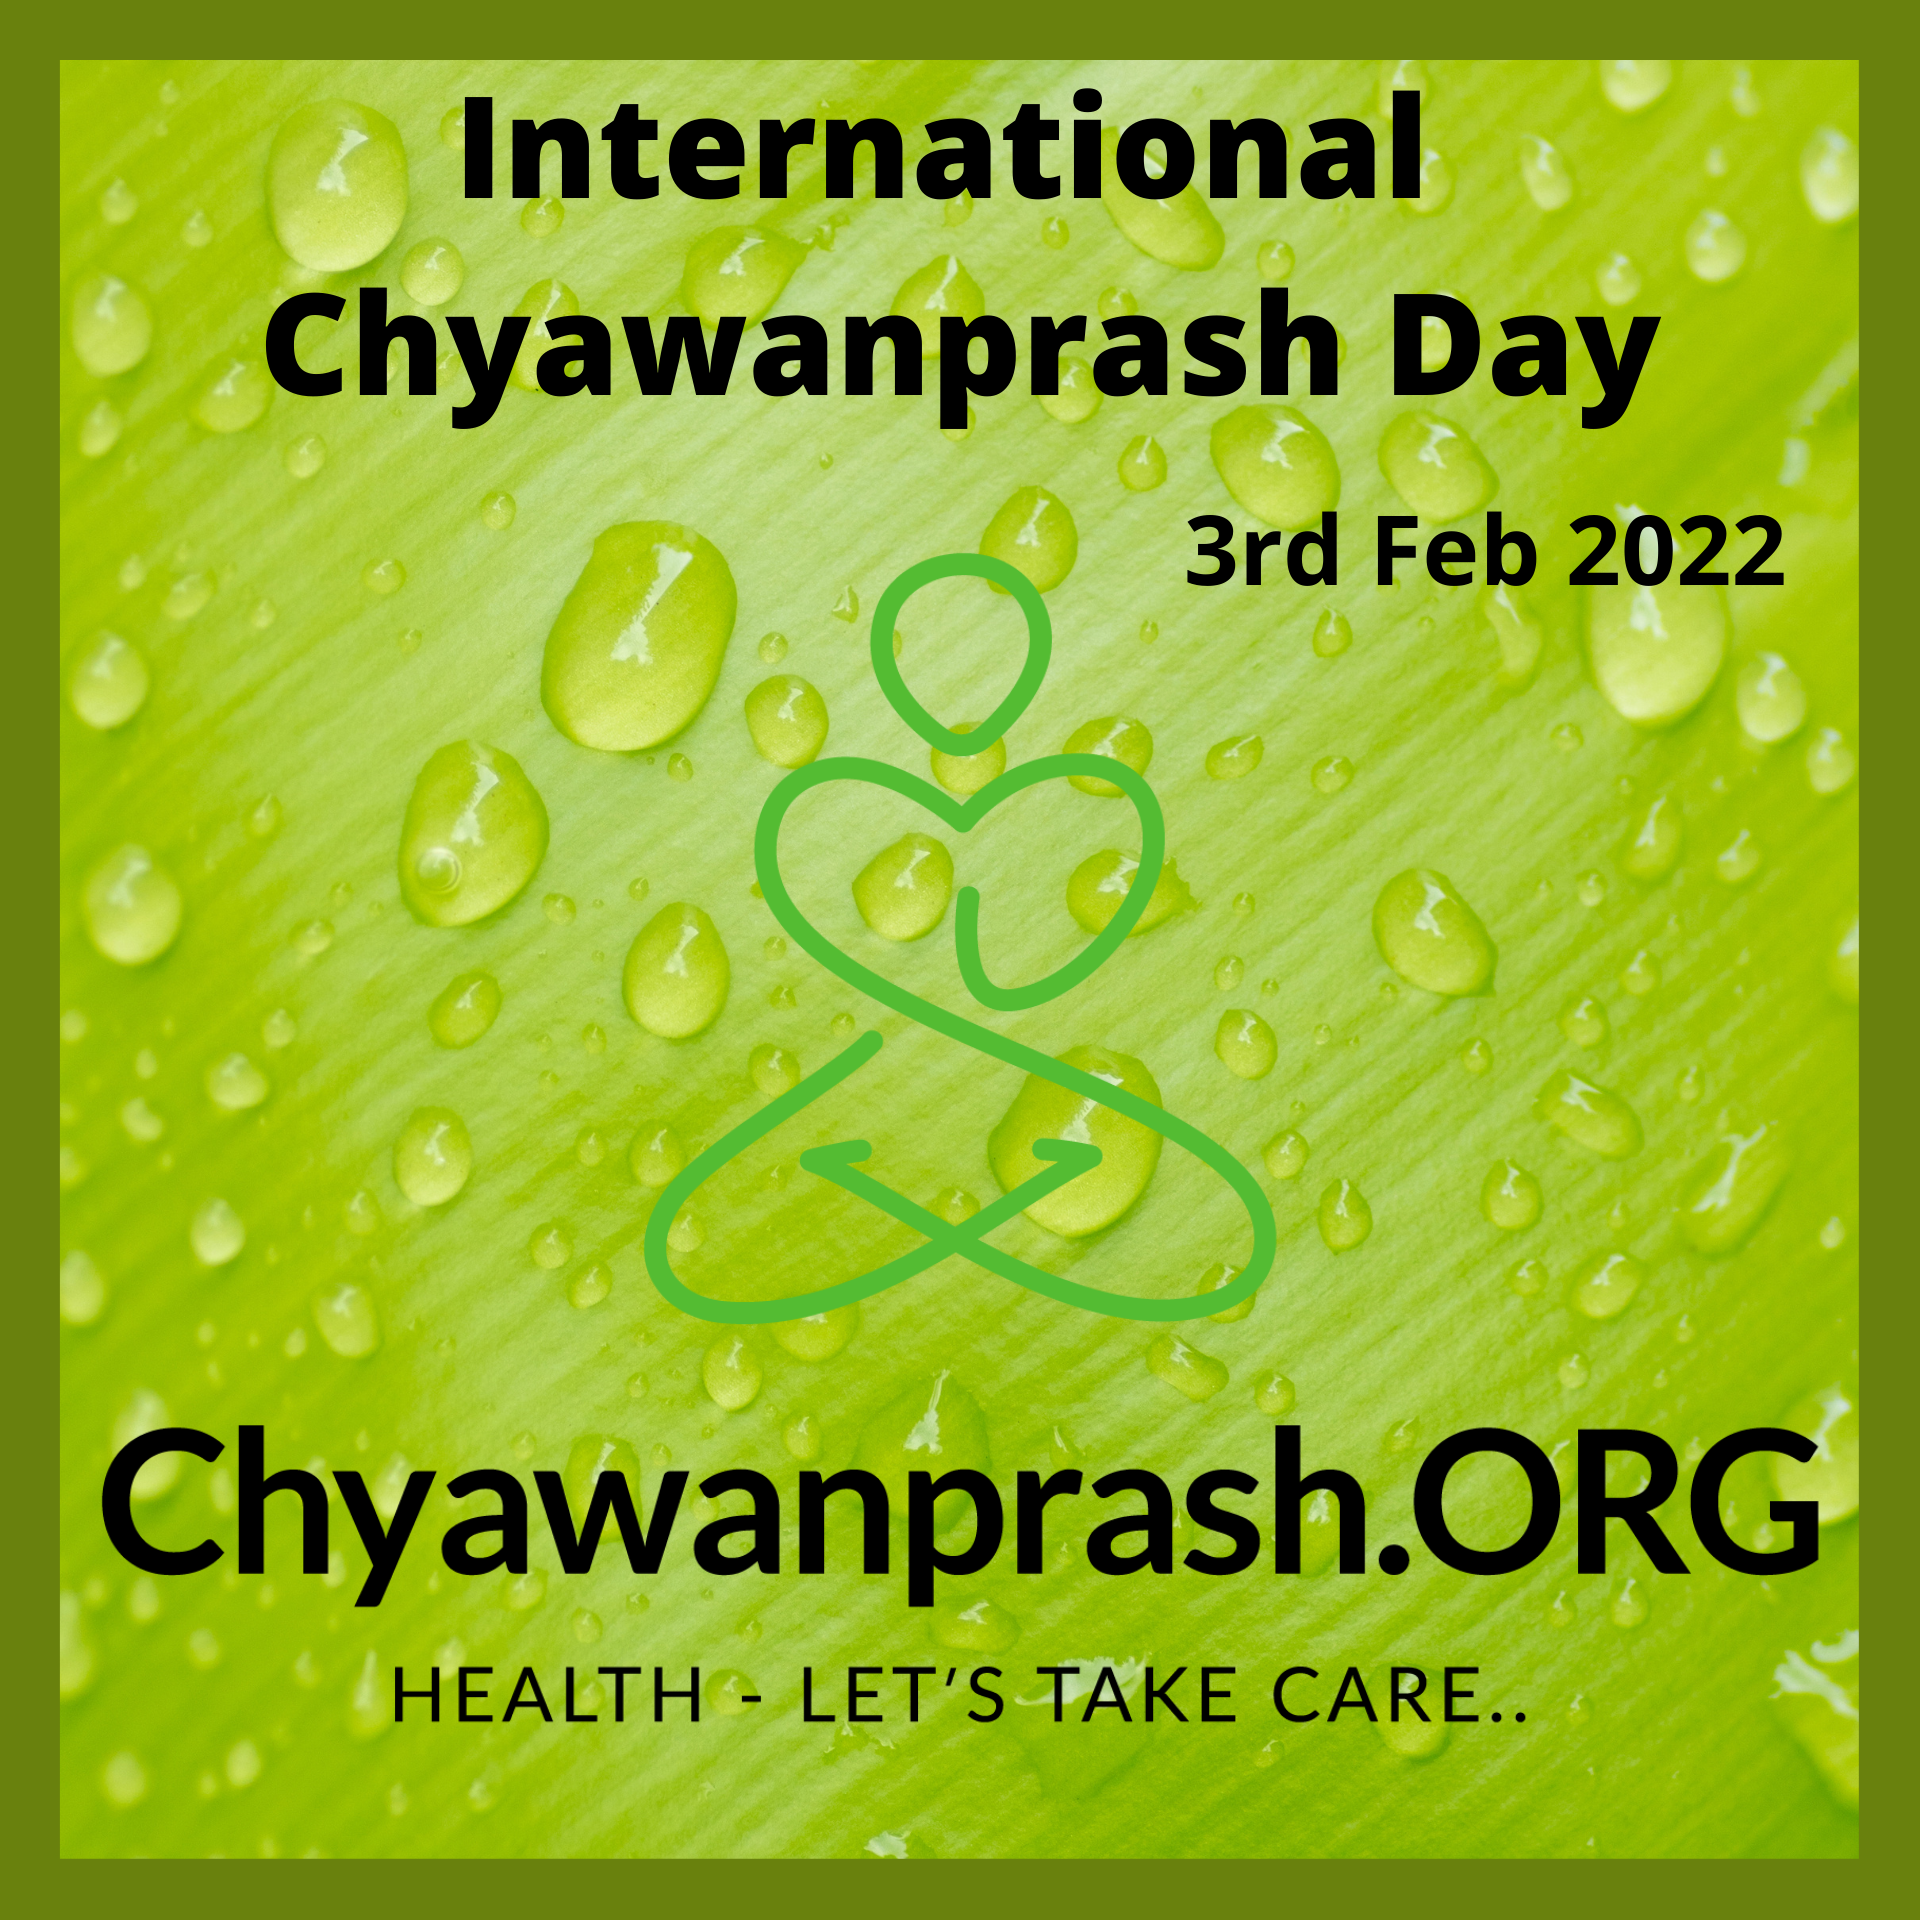 Chyawanprash.ORG Picks 3rd February For Celebration Of First-Ever International Chyawanprash Day 2022